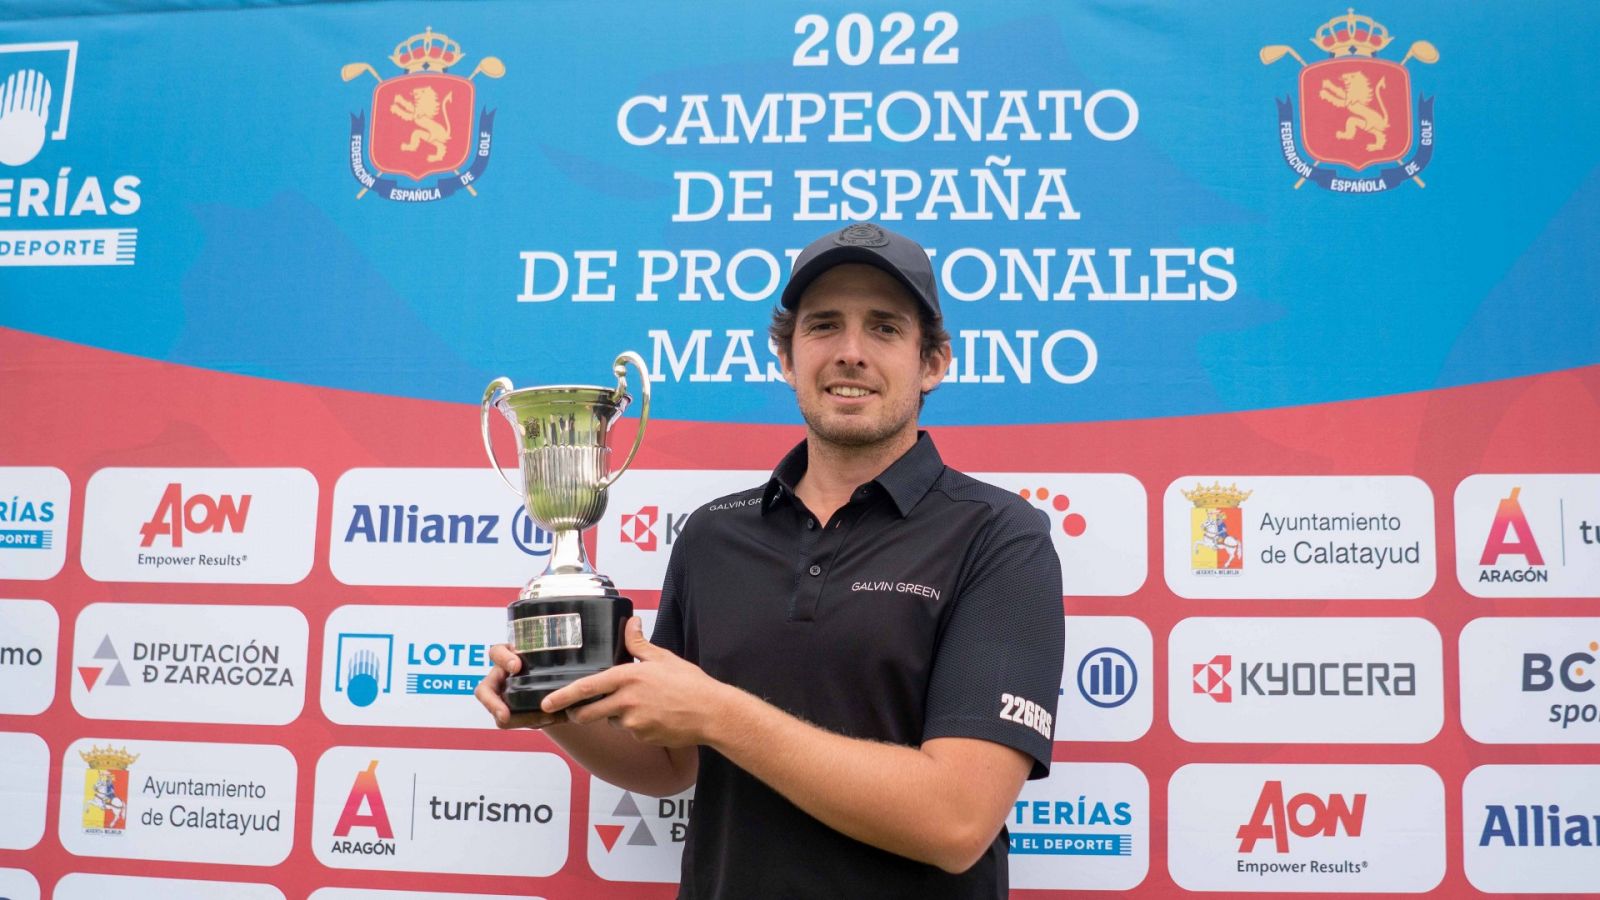 Manuel Elvira, campeón de España de profesionales de golf 2022